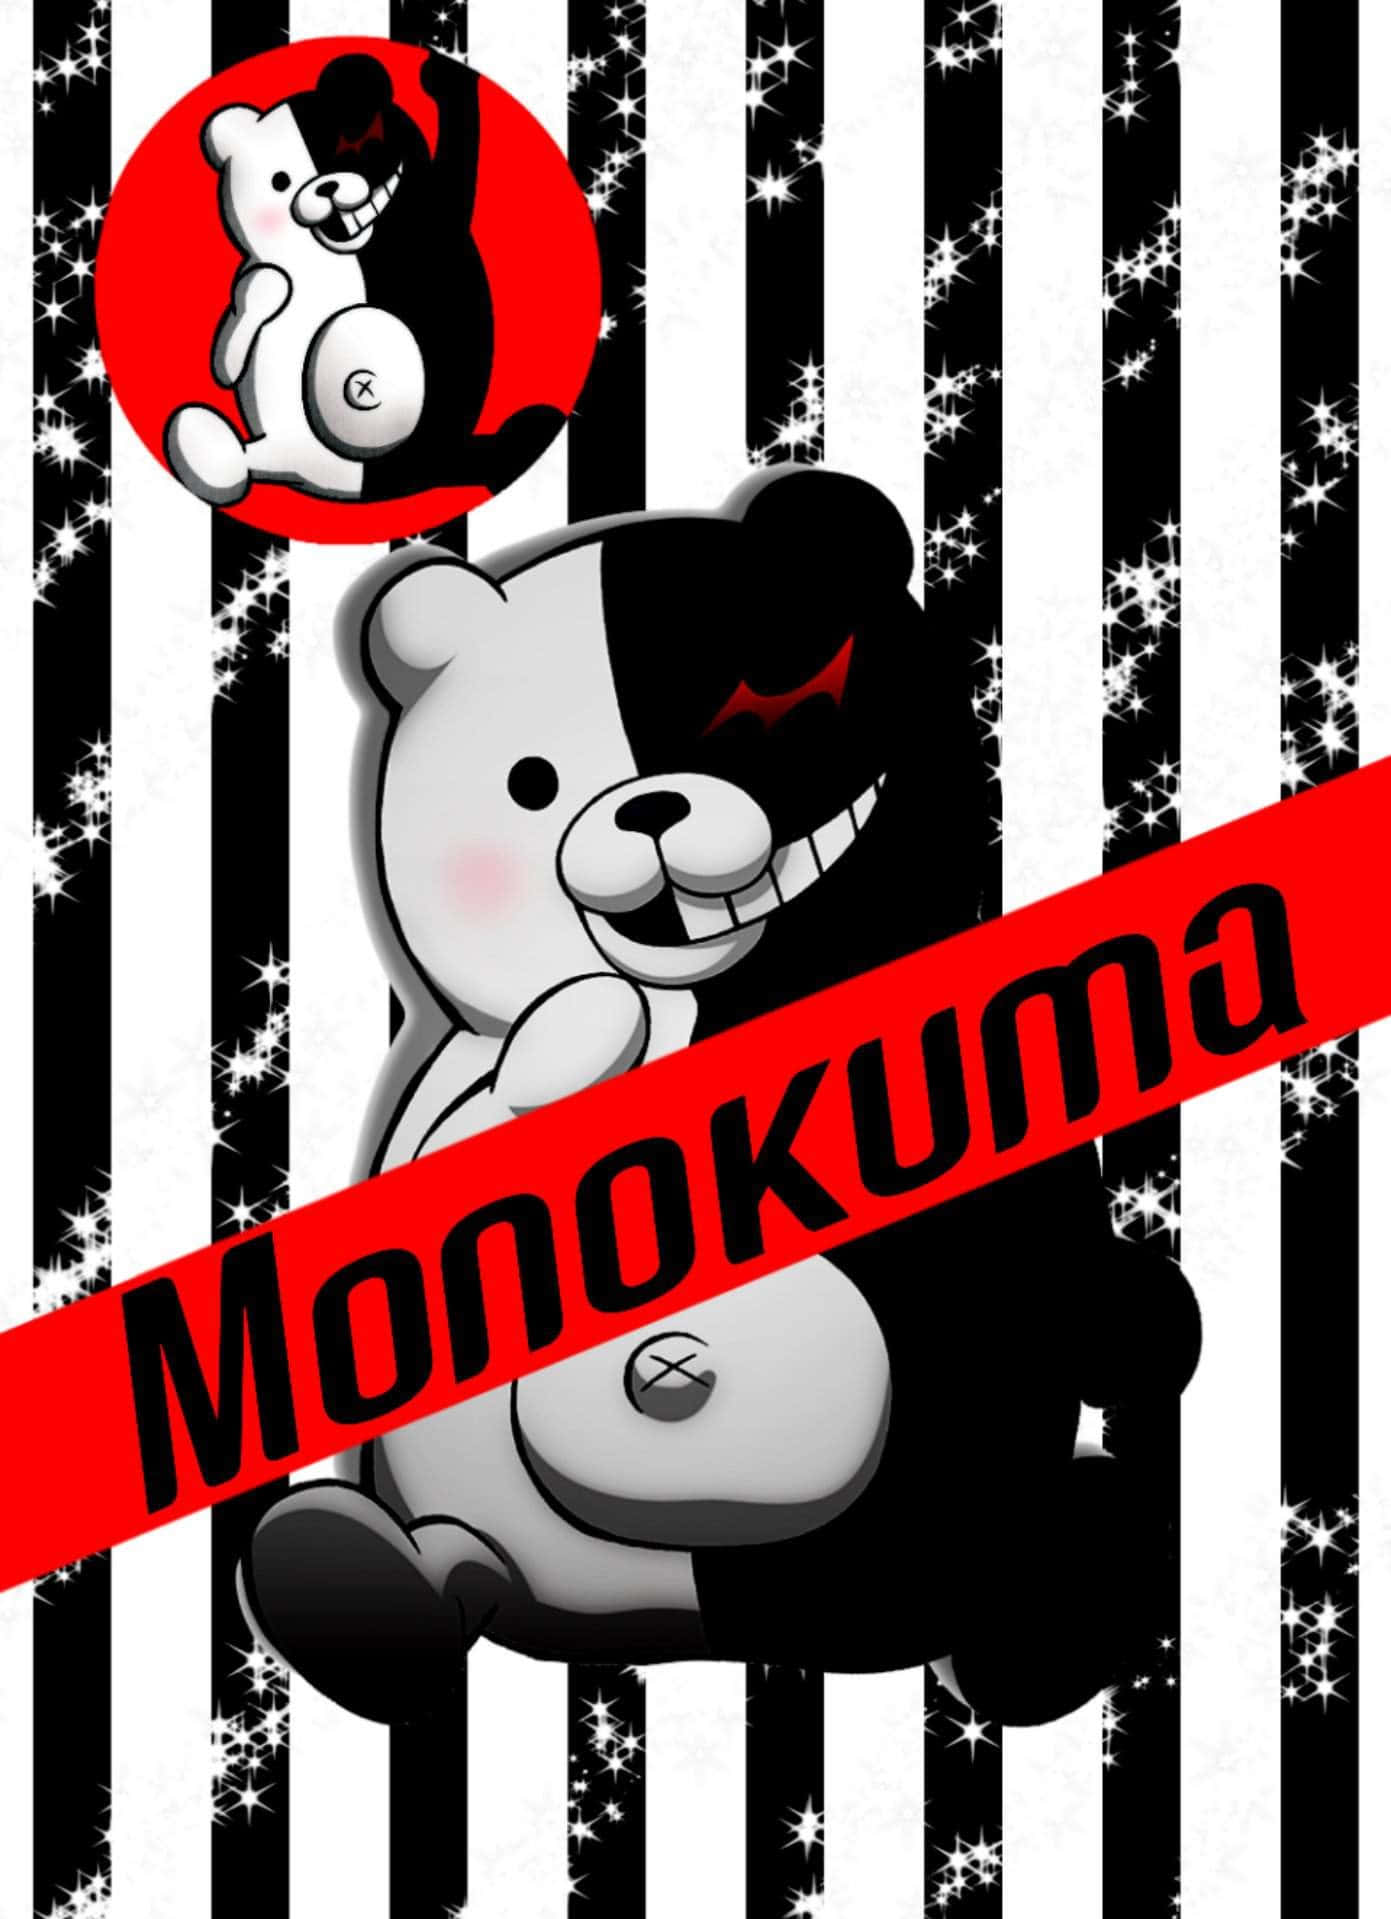 Monokuma Danganronpa Anime Poster Tapet: Et levende tapet af Monokuma, figuren fra Danganronpa-spillet. Wallpaper